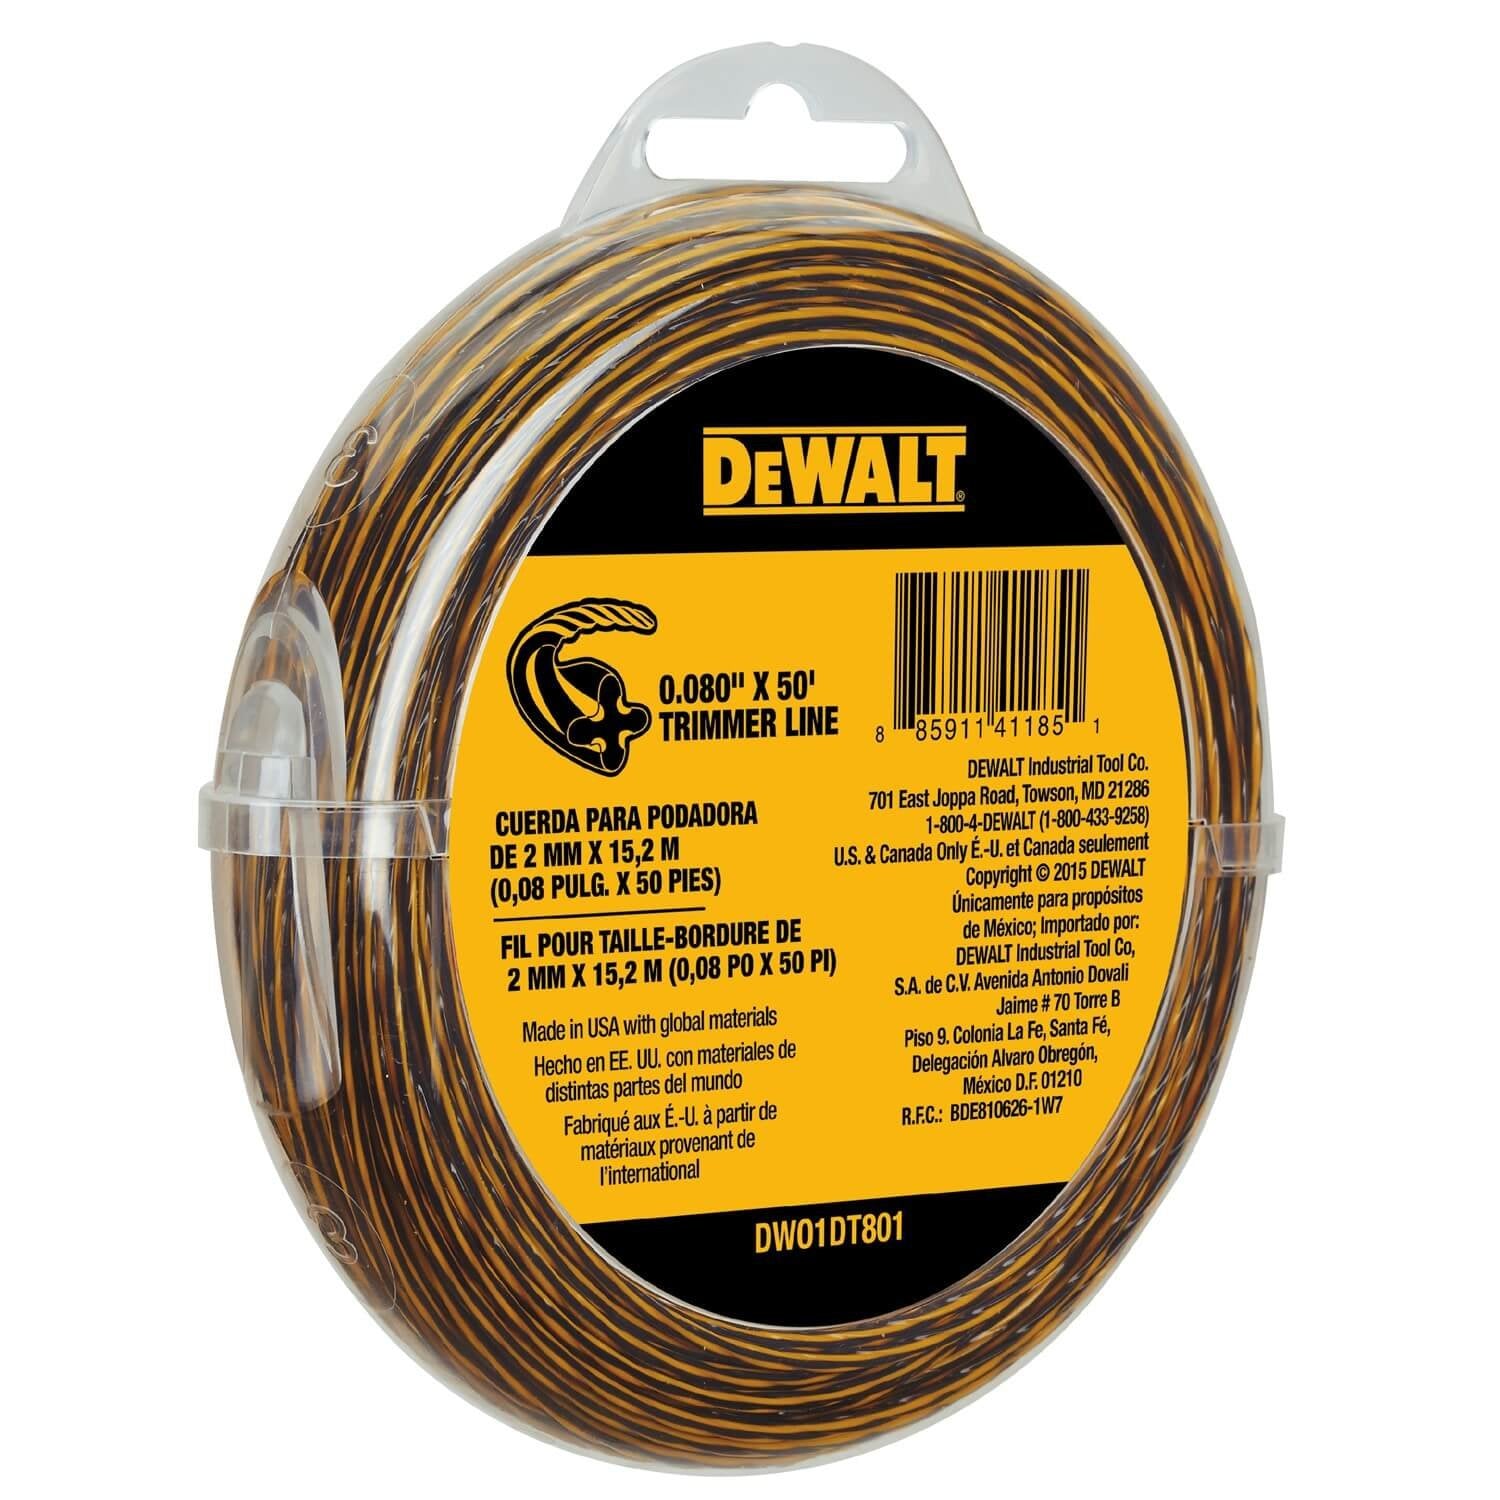 DEWALT DWO1DT801 String Trimmer Line, 50-Feet by 0.080-Inch